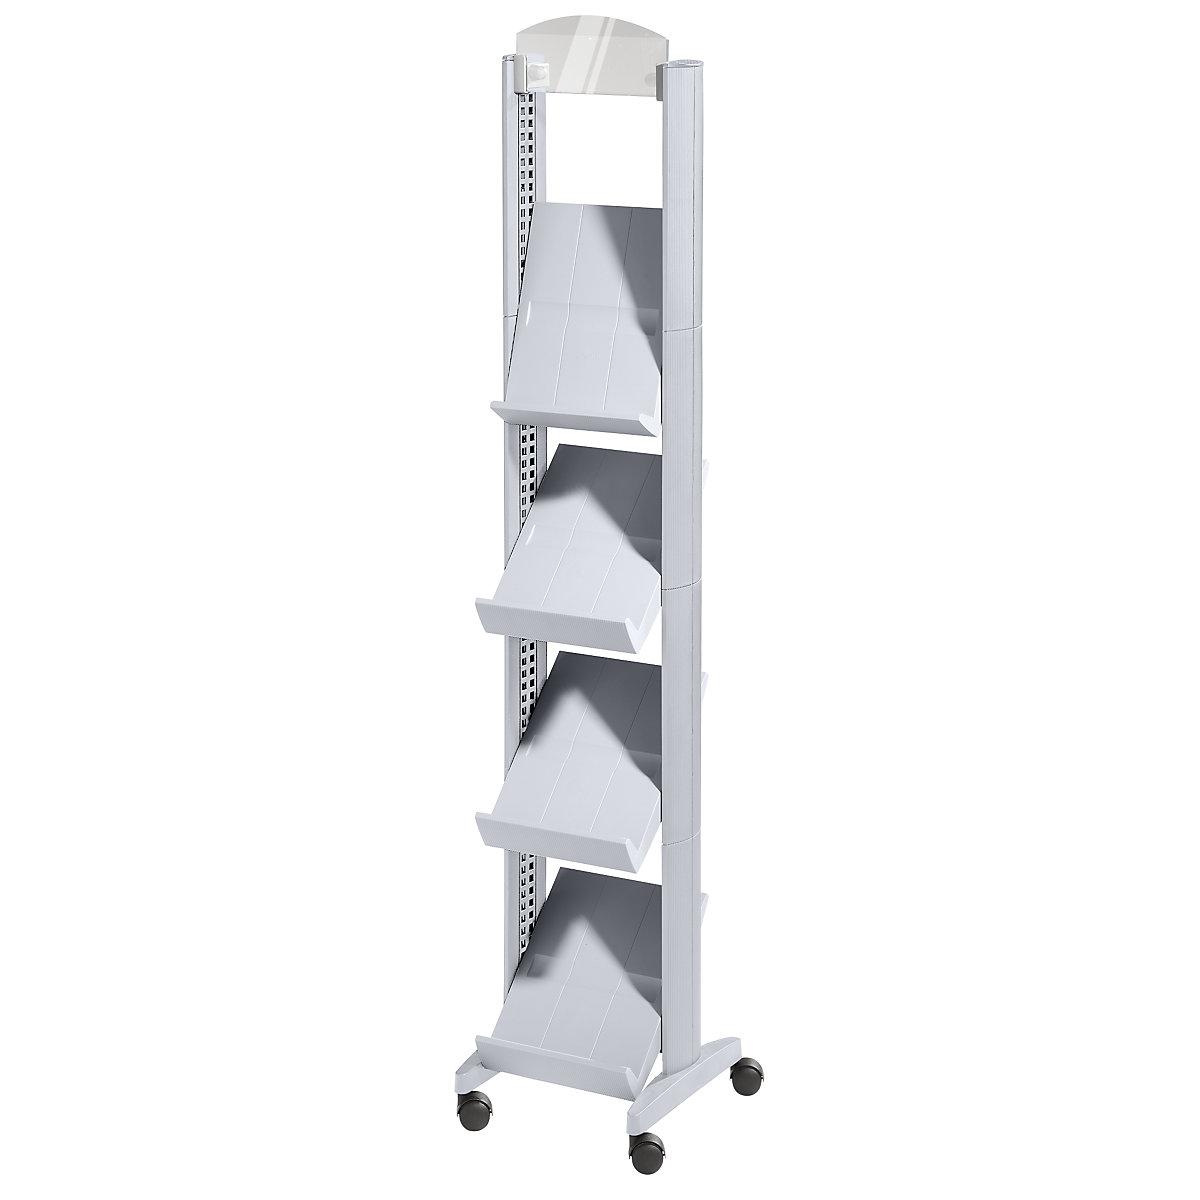 Polistirenski stalak za prospekte, za 4 x DIN A4, s reklamnom površinom, u aluminij srebrnoj / aluminij srebrnoj boji-3